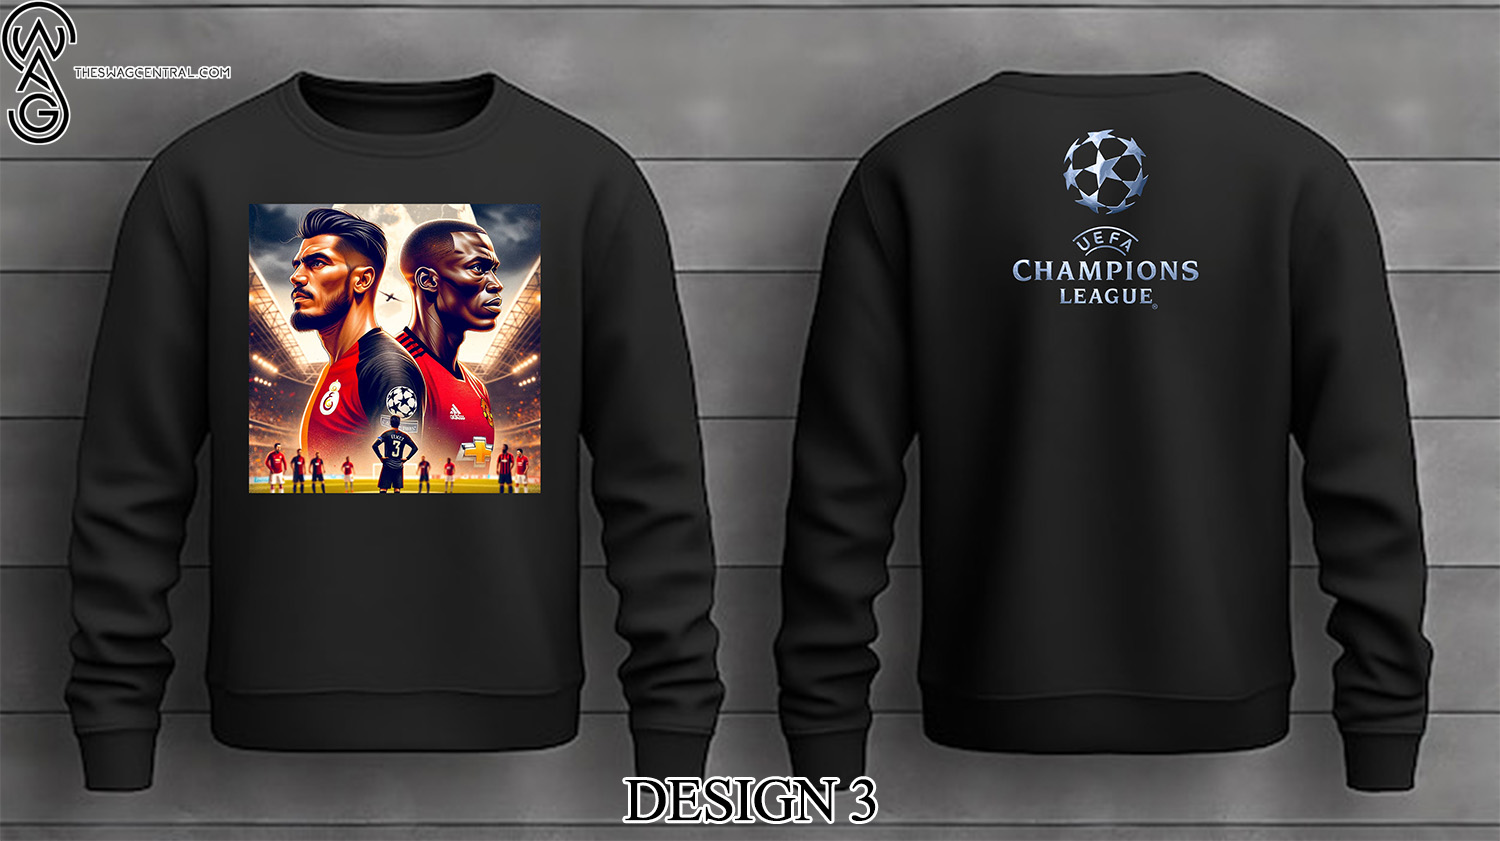 UEFA Champions League Galatasaray vs Manchester United Shirt